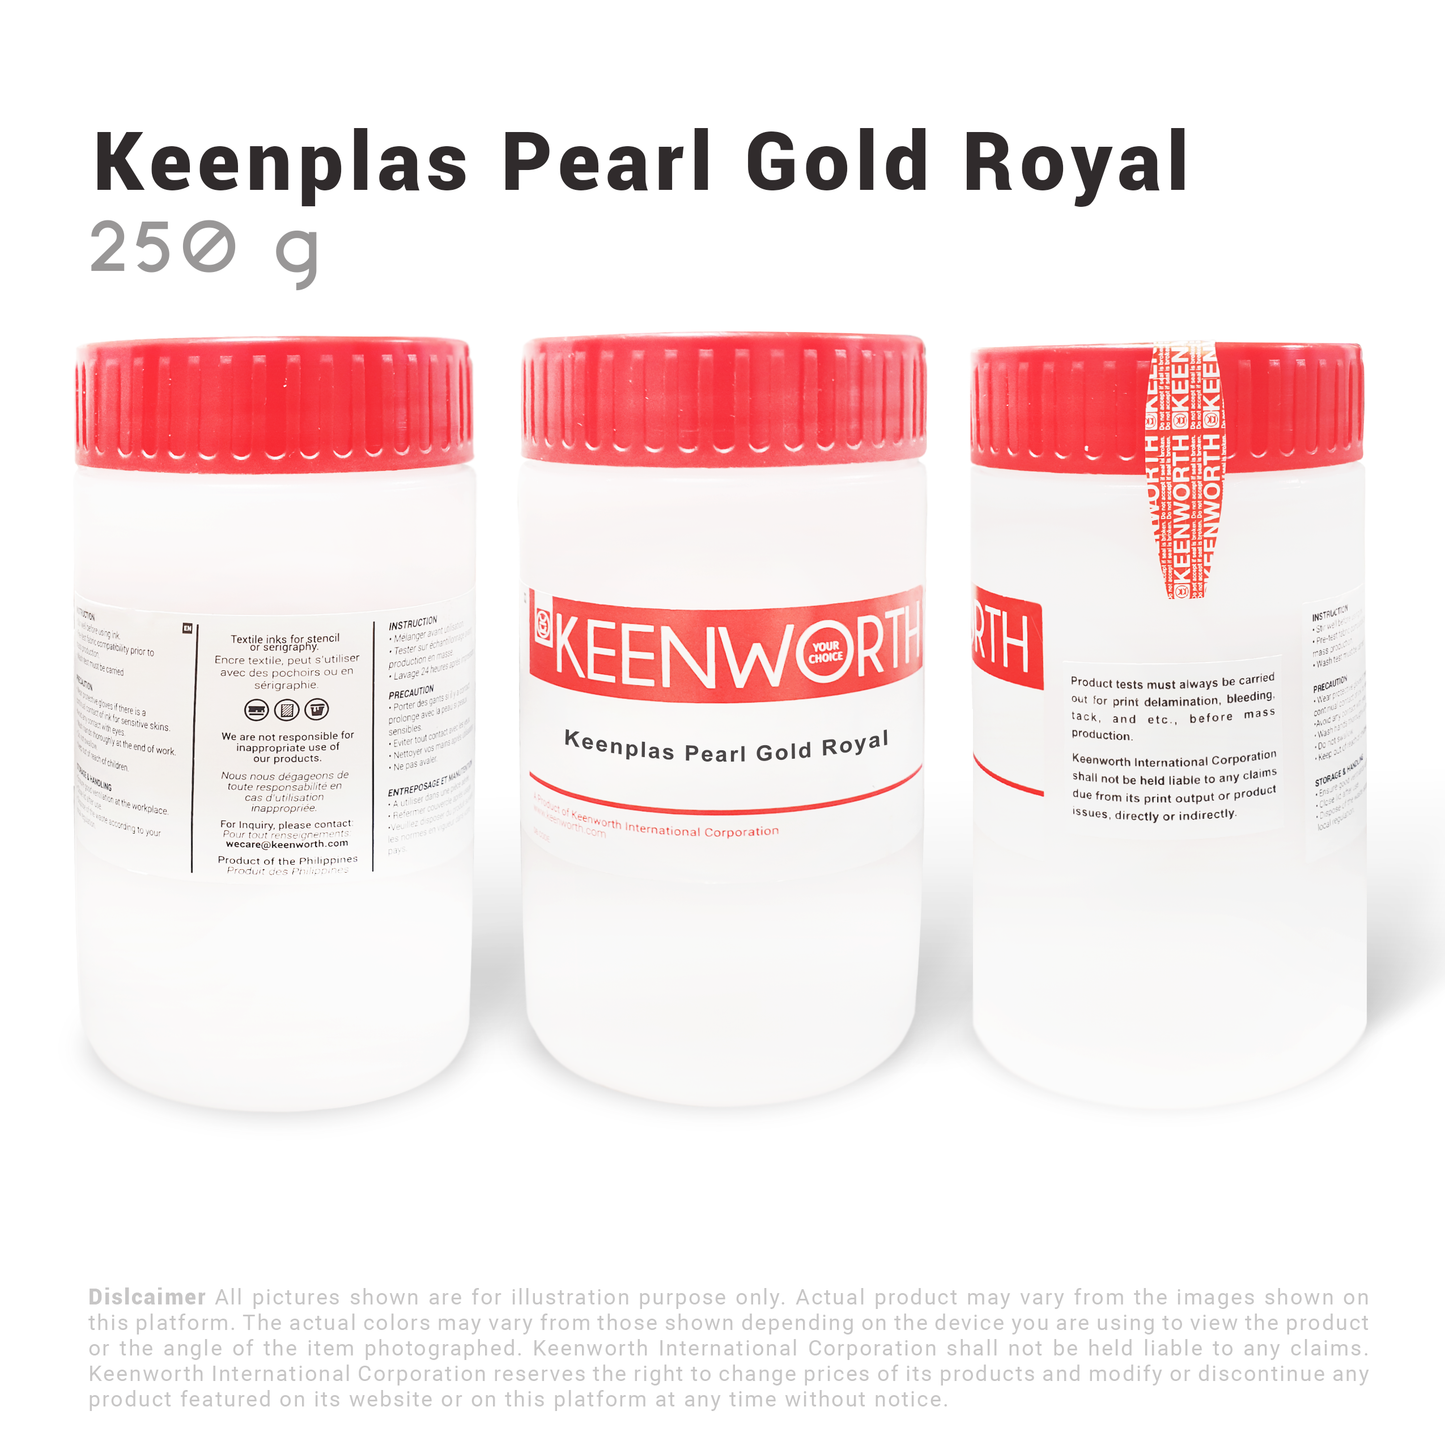 Keenplas Pearl Gold Royal